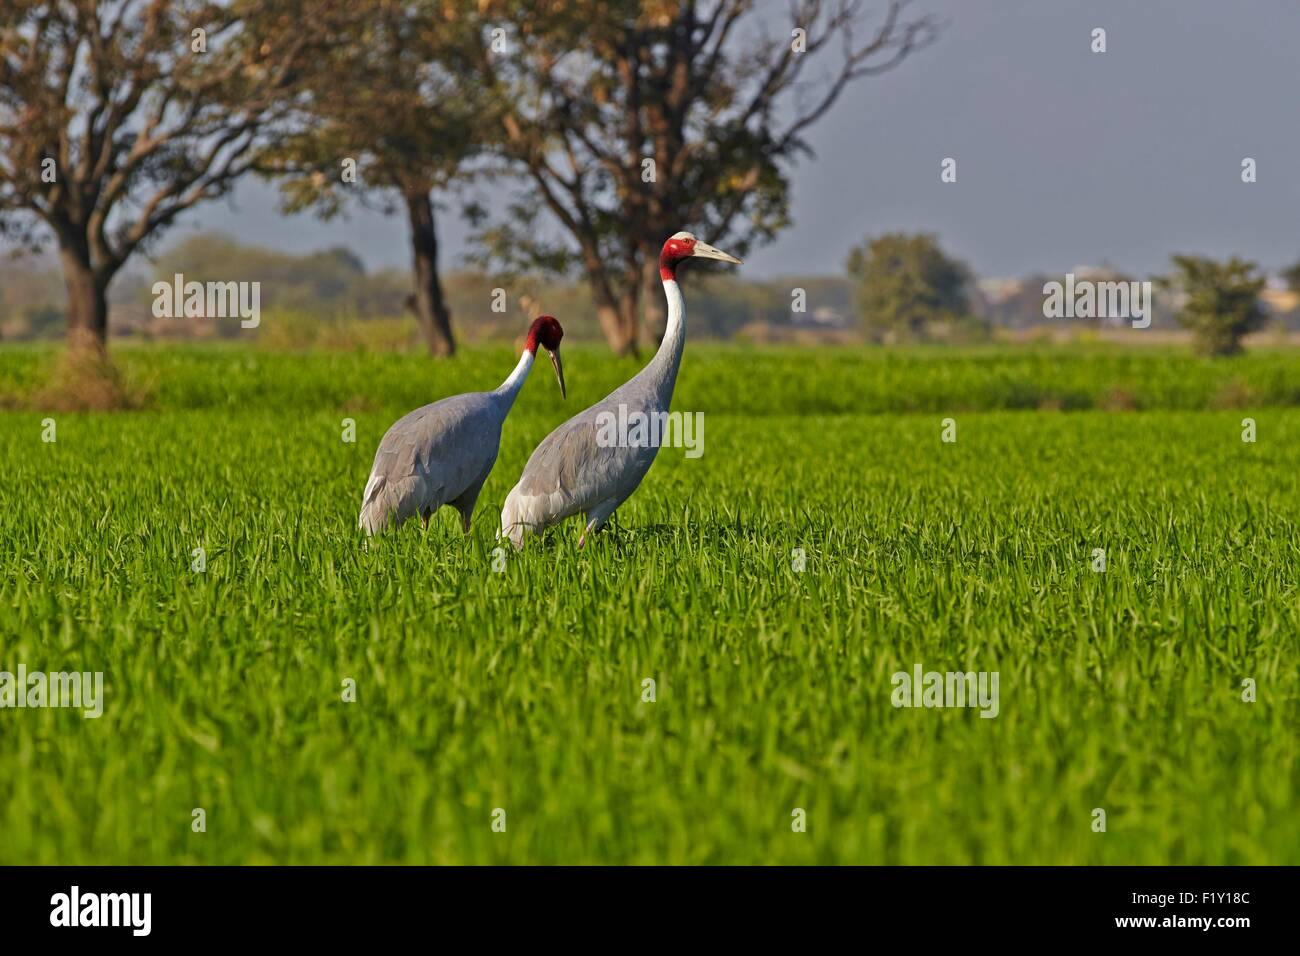 India, Rajasthan state, Bharatpur, Sarus crane (Grus antigone), in the fields Stock Photo